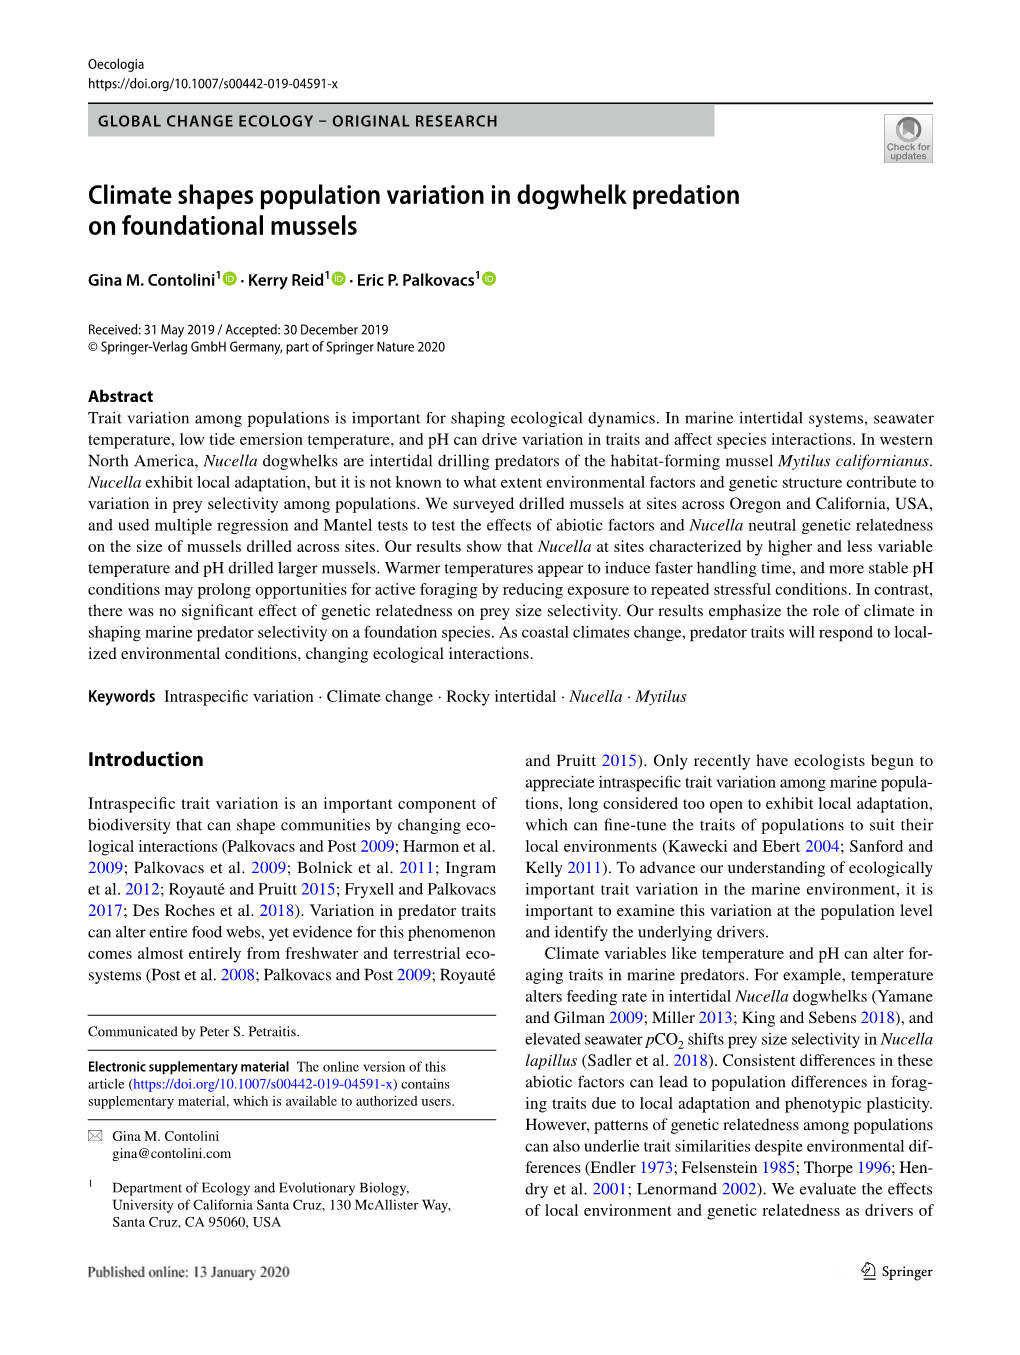 Climate Shapes Population Variation in Dogwhelk Predation on Foundational Mussels